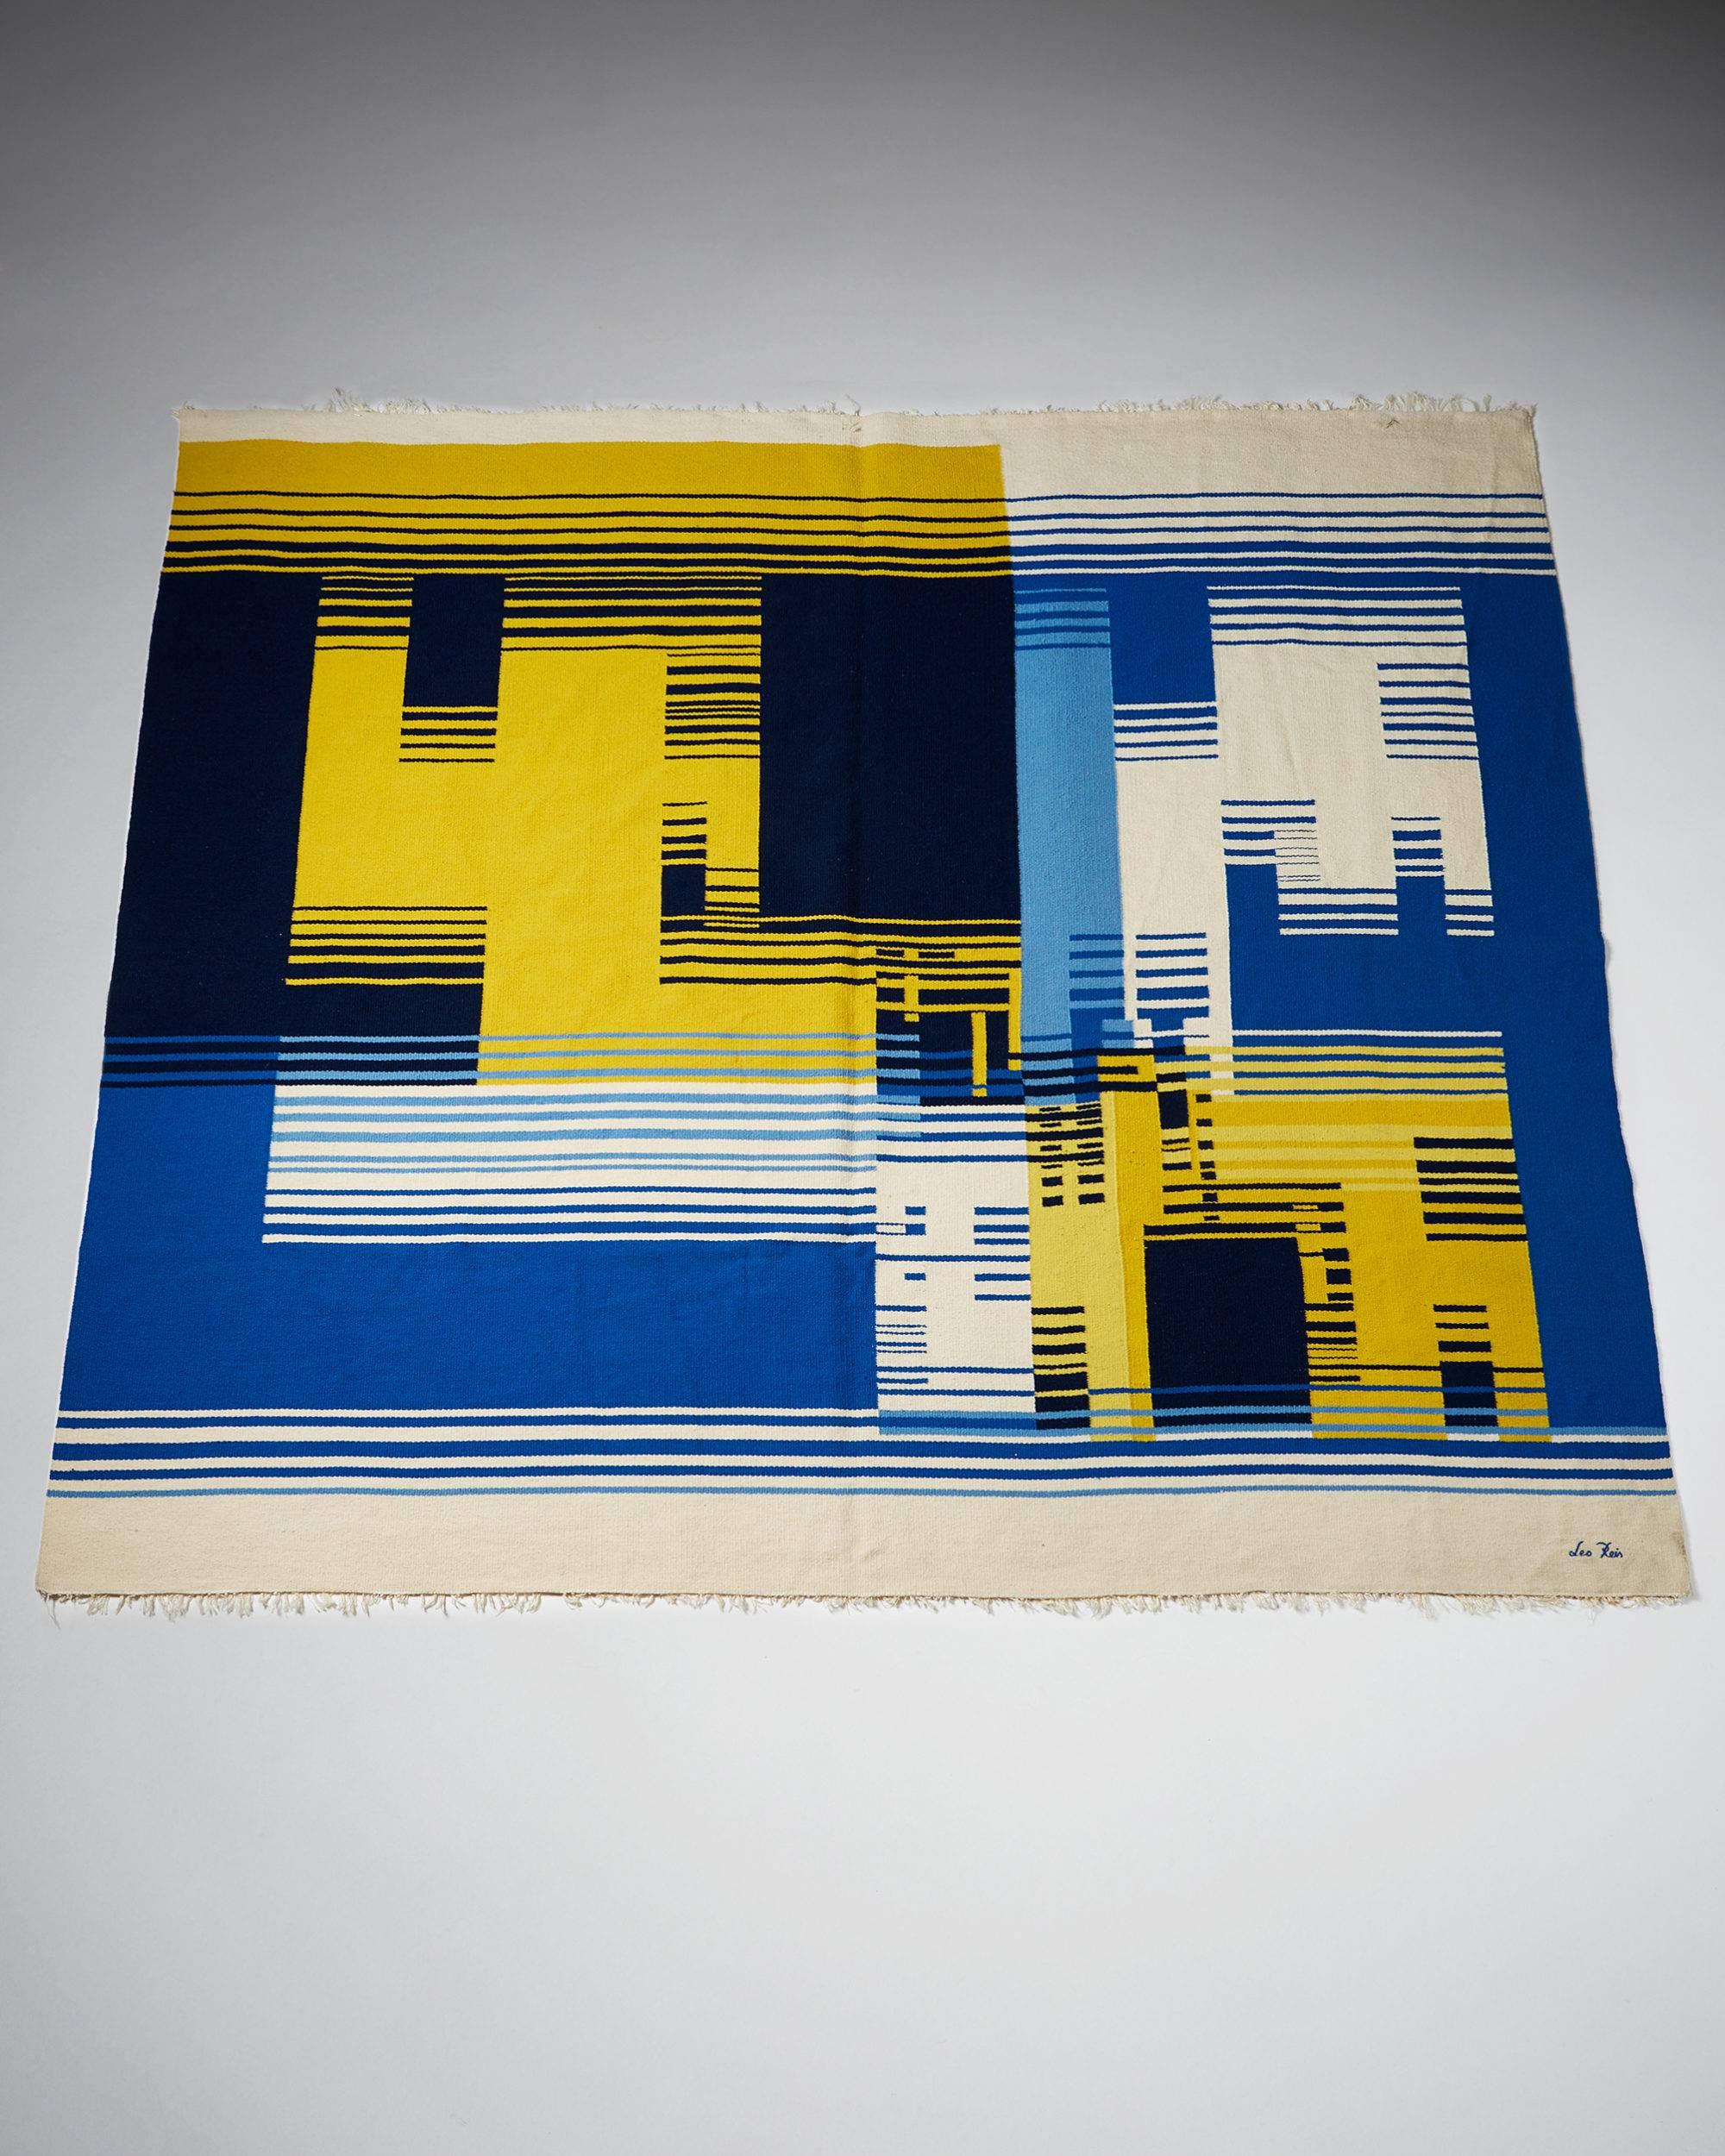 Tapestry by Leo Reis, Sweden, 1980s. Handwoven wool.

Measure: H 217 cm/ 6' 9 1/2''
W 190 cm/ 6' 3 3/4''.